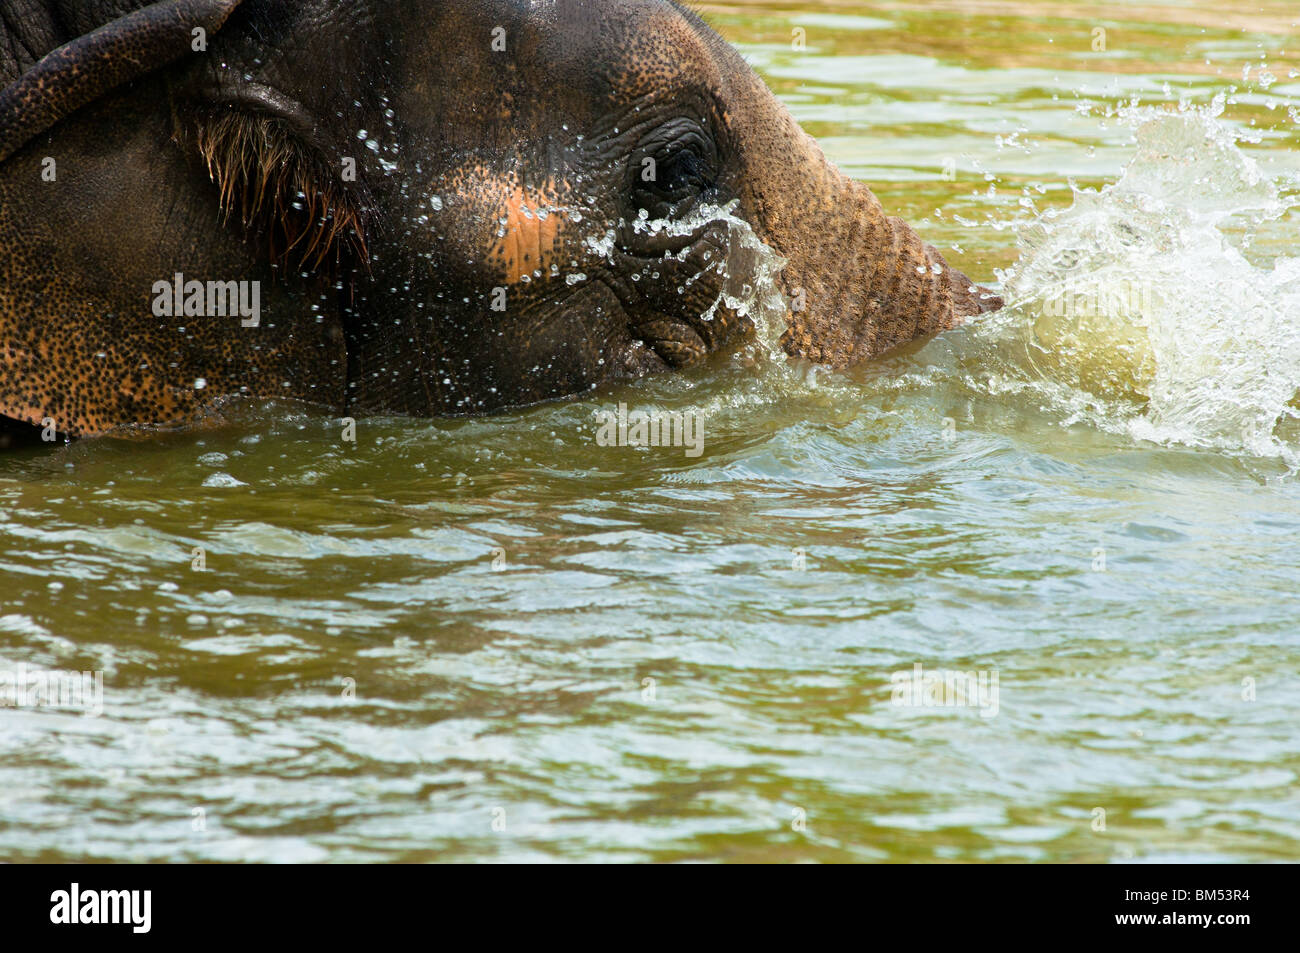 Elephant deep in water Stock Photo